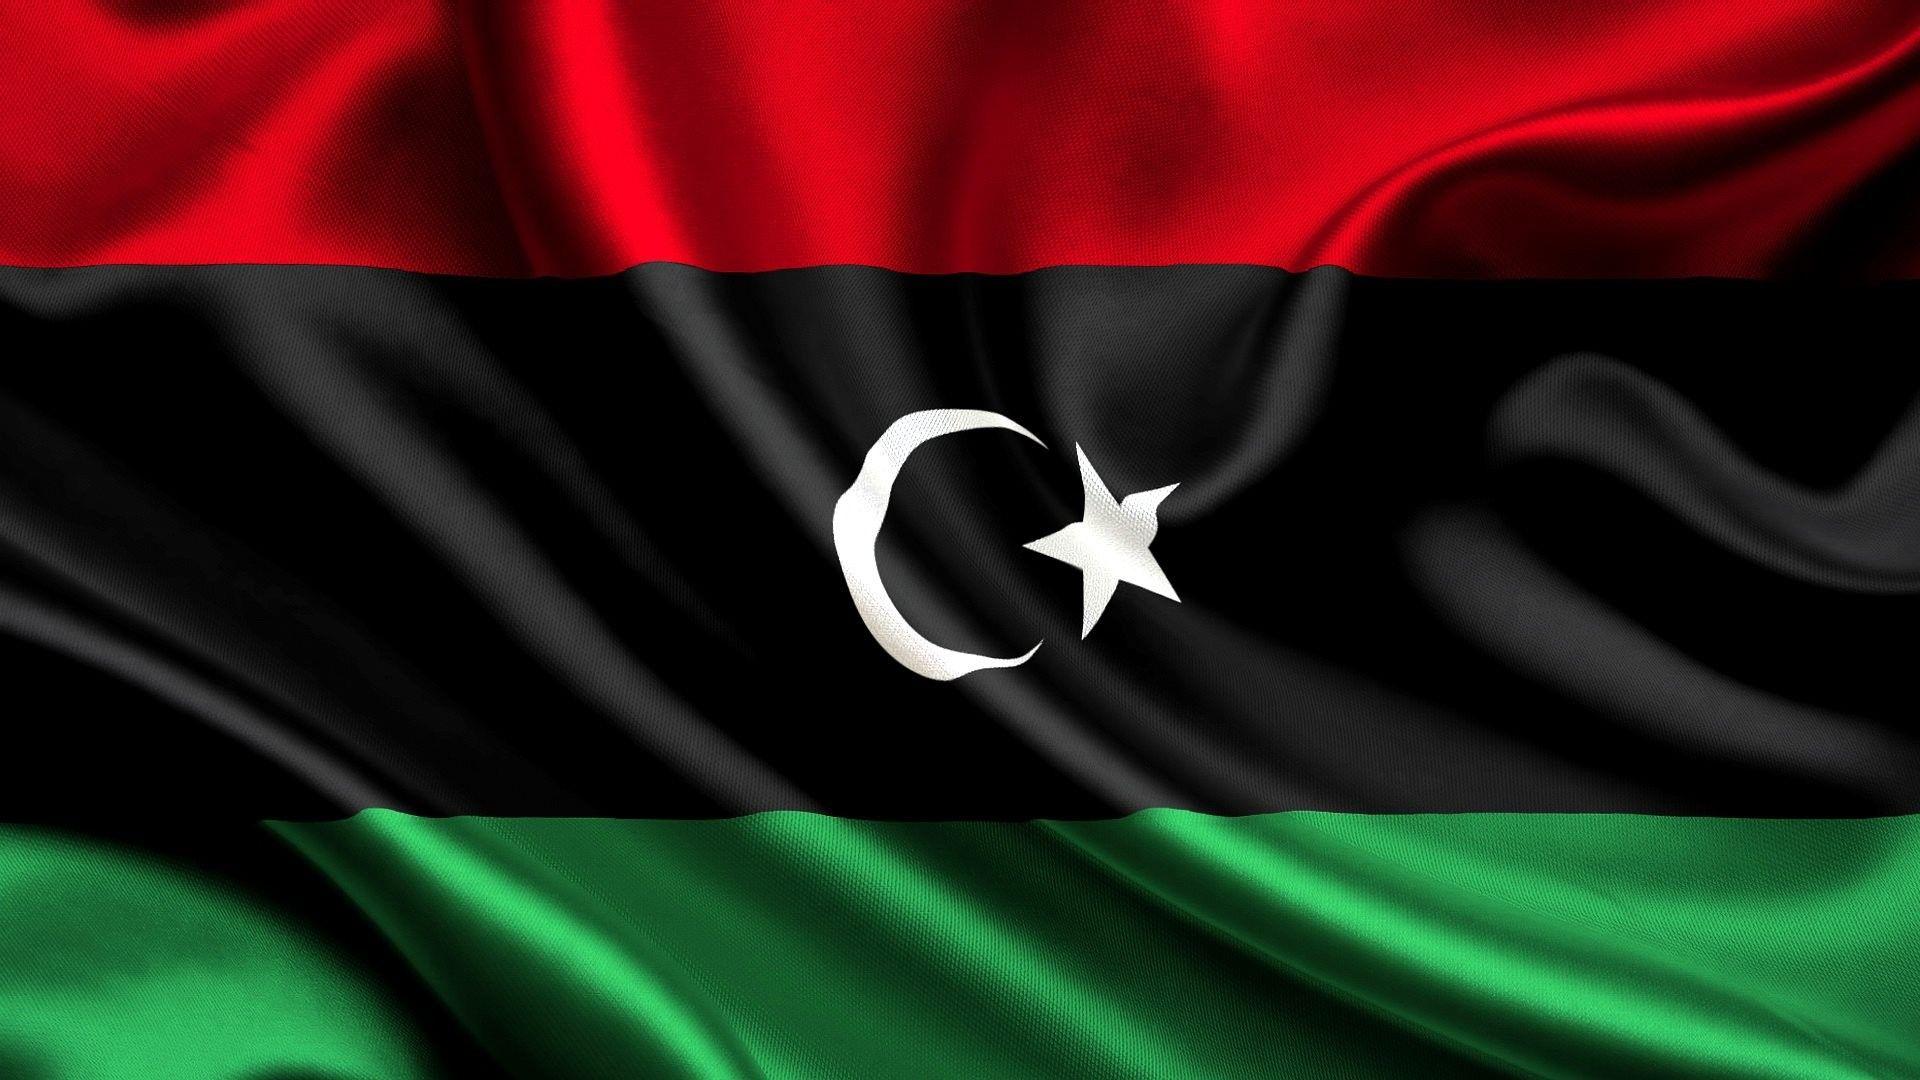 Libya Flag wallpaper. Flags wallpaper. Flags